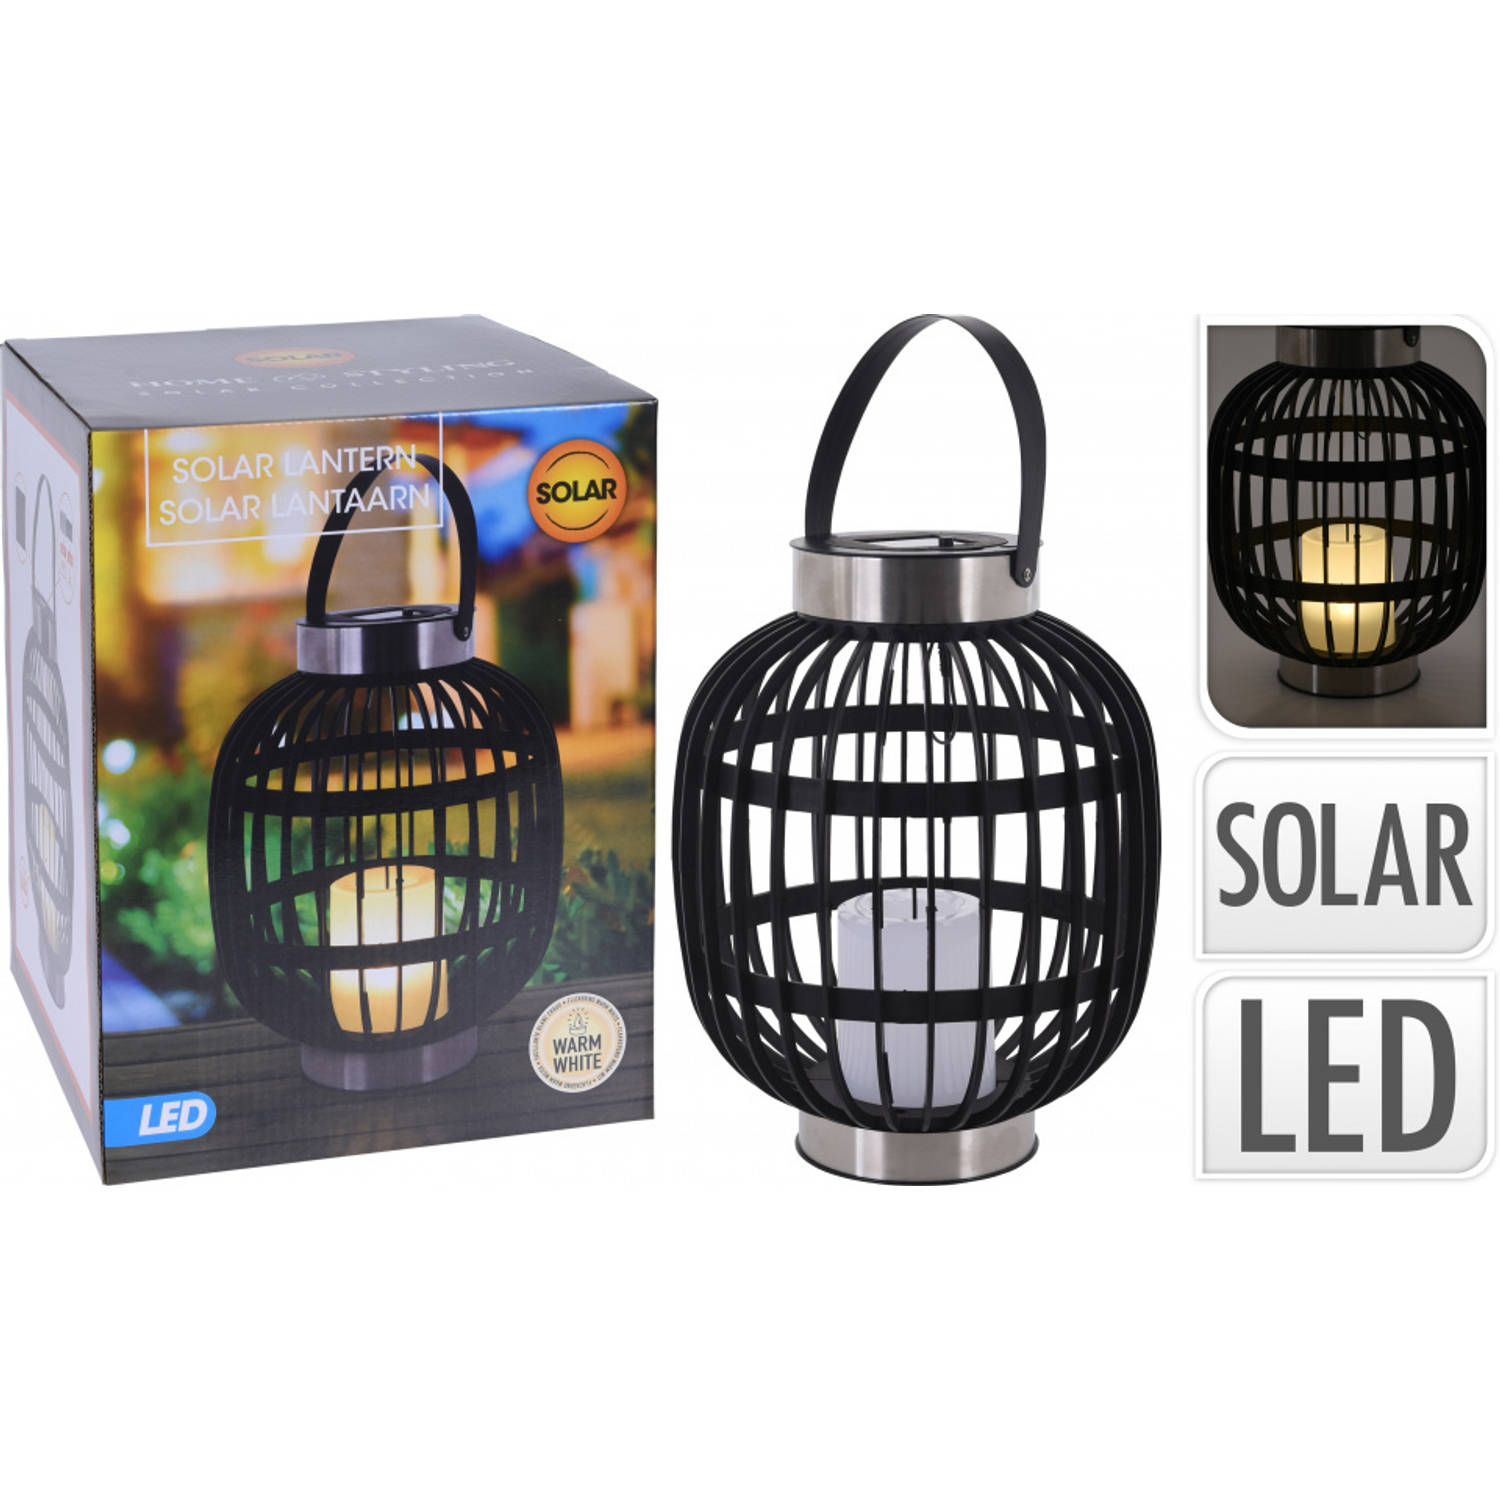 Home & Styling - Solar buitenlamp lantaarn - LED windlicht | Blokker